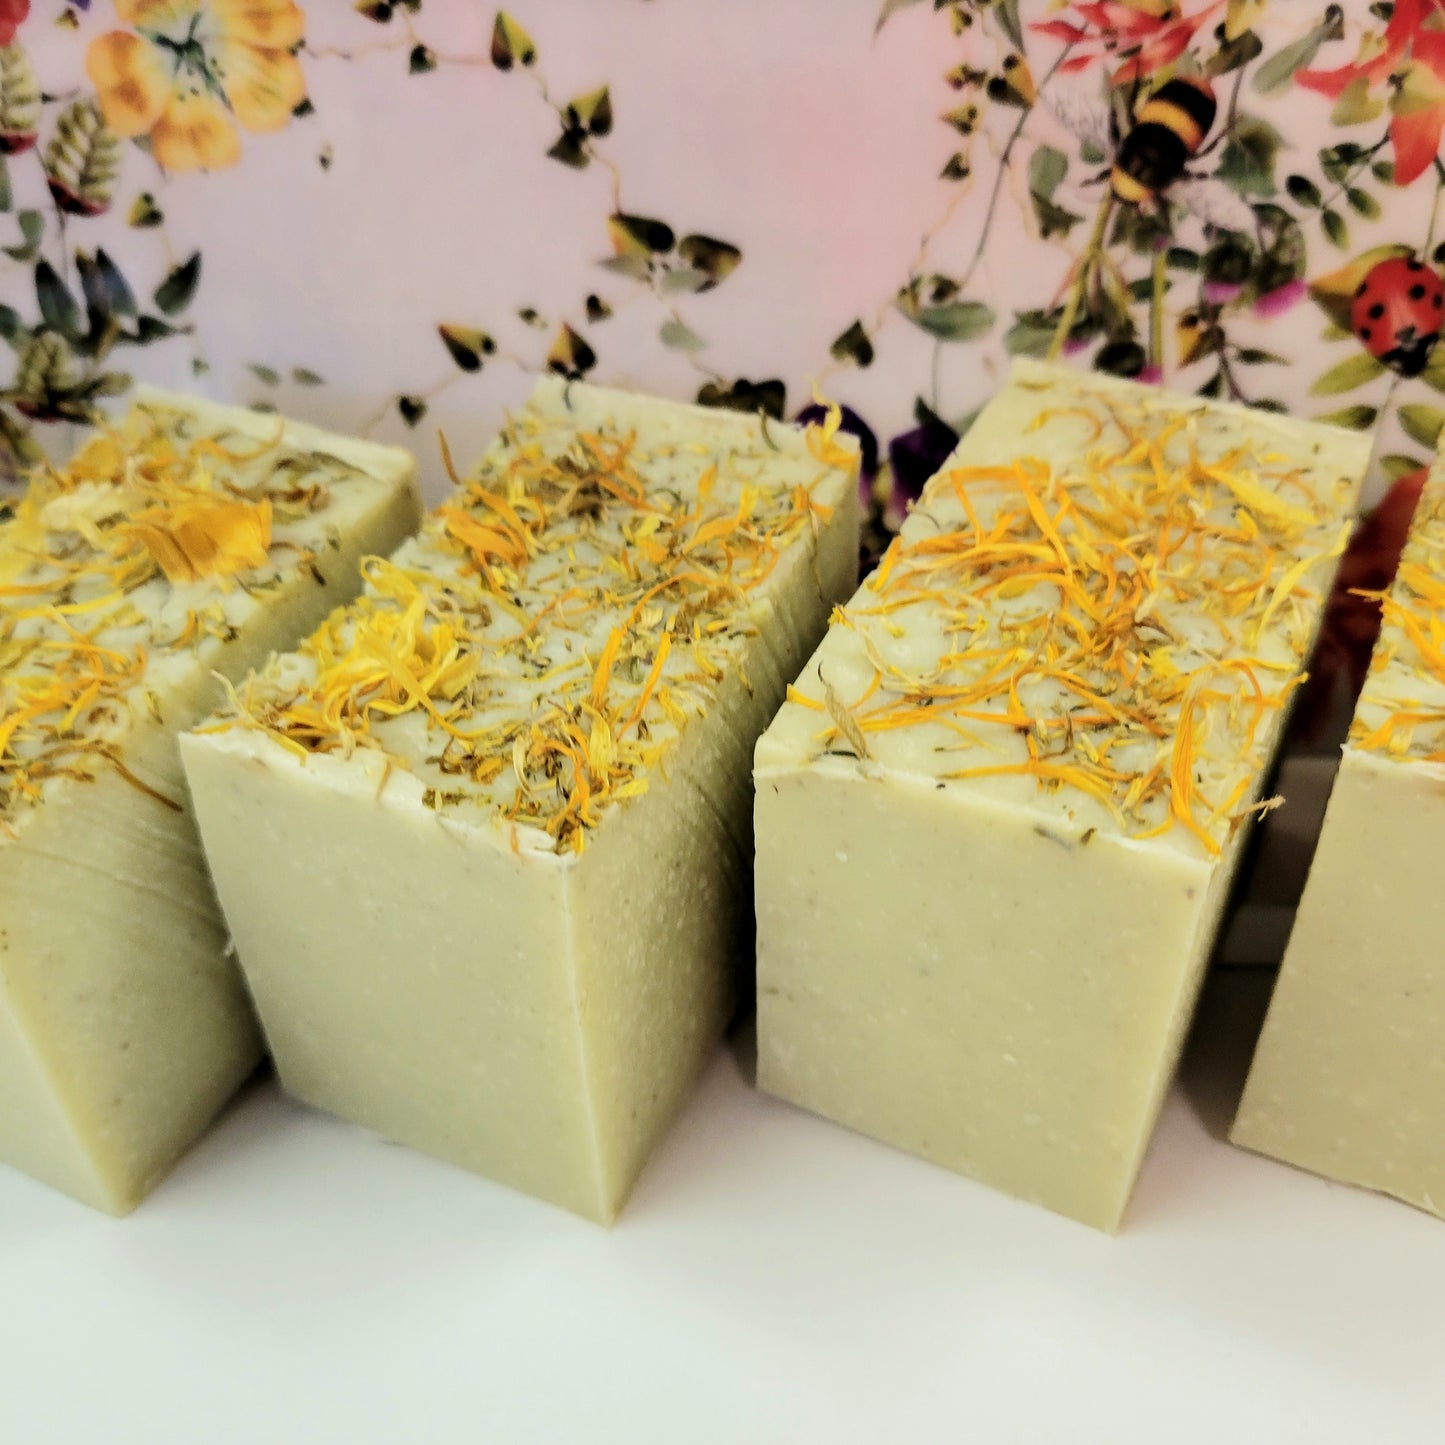 White Chamomile Citrus Soap topped with Calendula Flowers Luxury Soap Bar